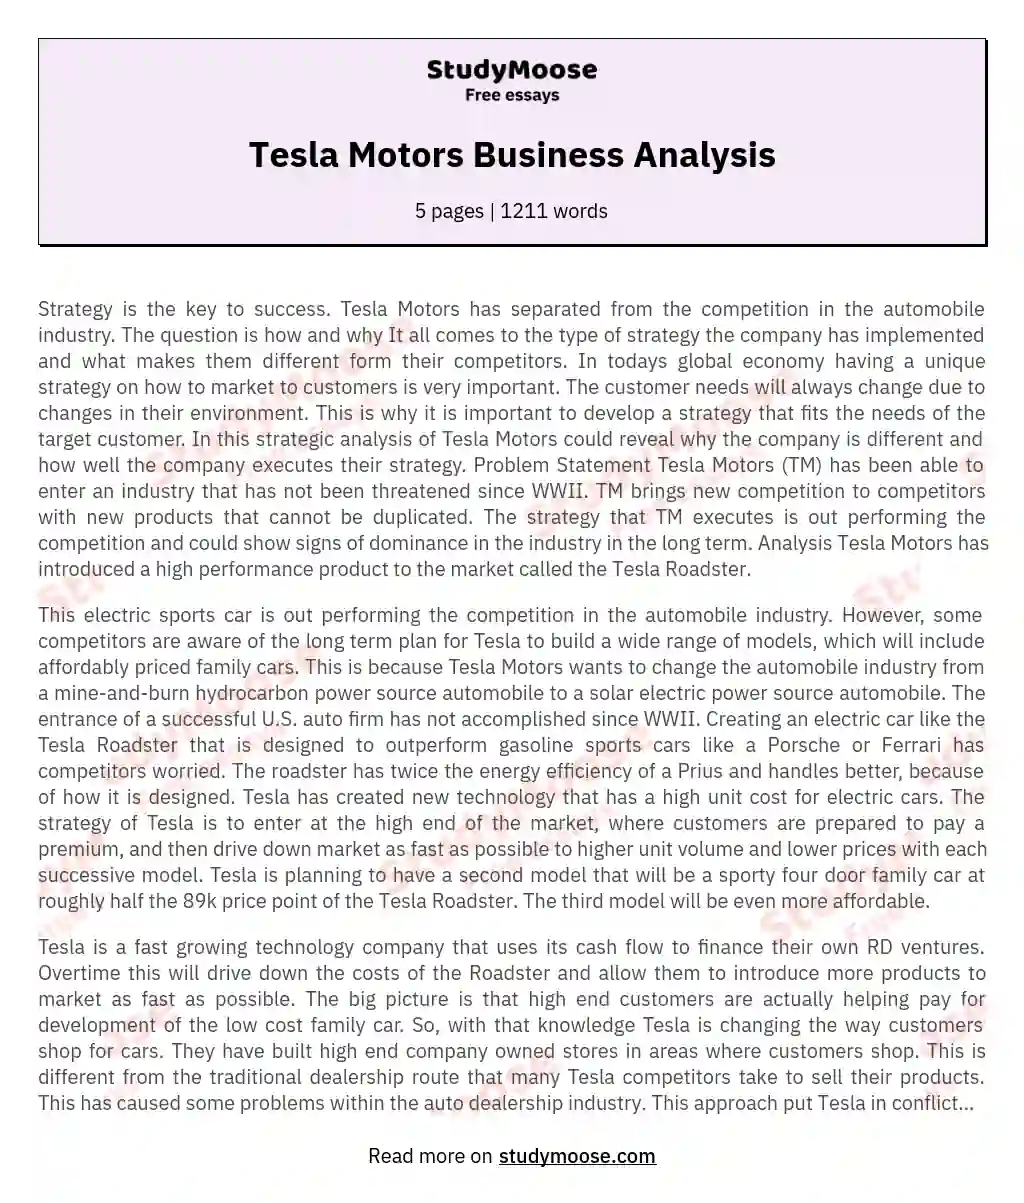 Tesla Motors: Revolutionizing the Automotive Industry essay